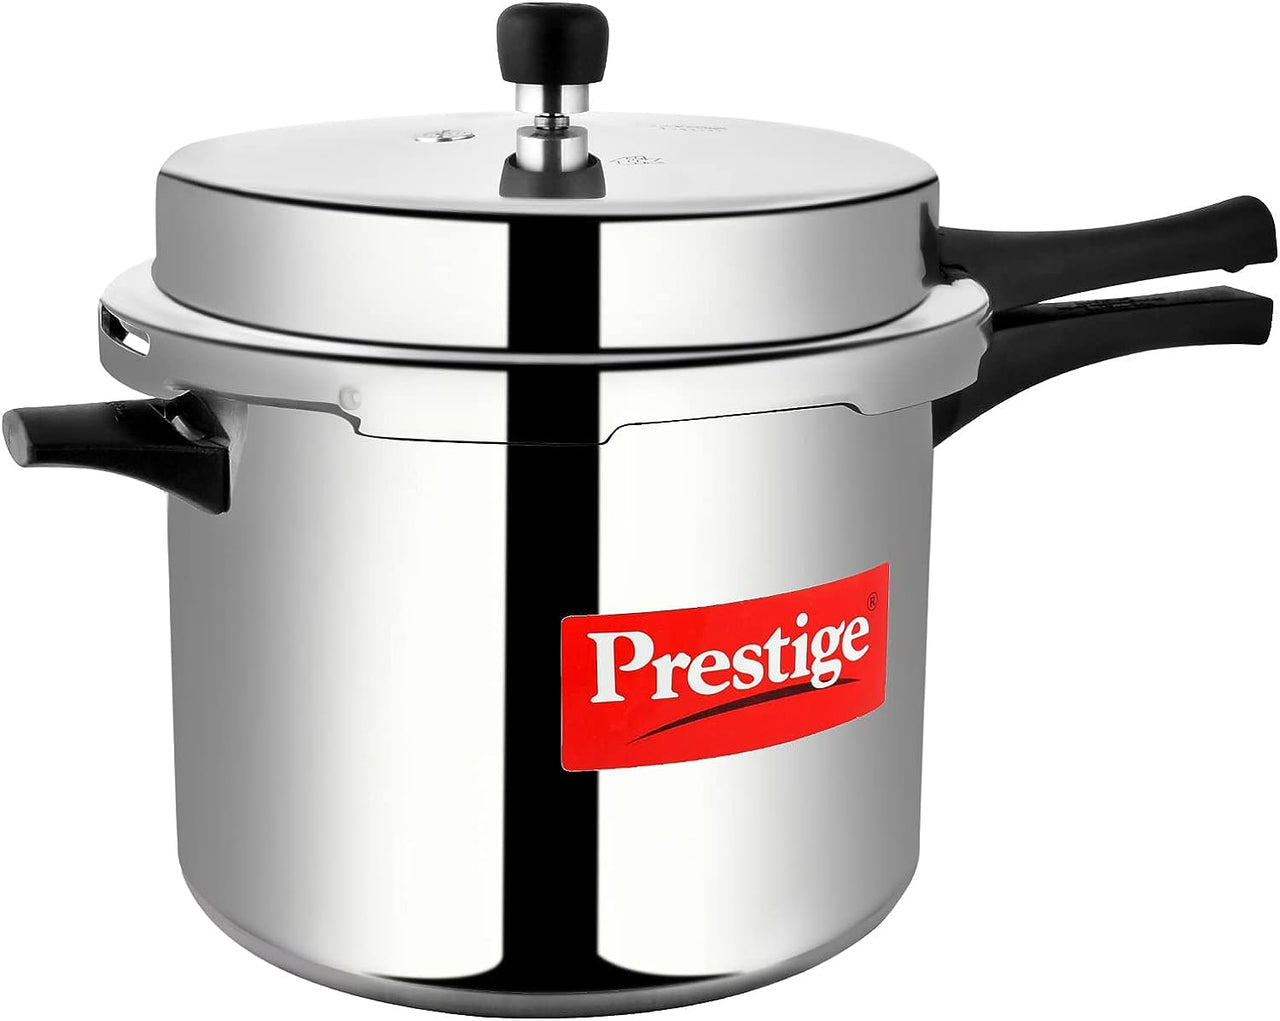 Prestige 7.5 Liters Aluminum Pressure Cooker